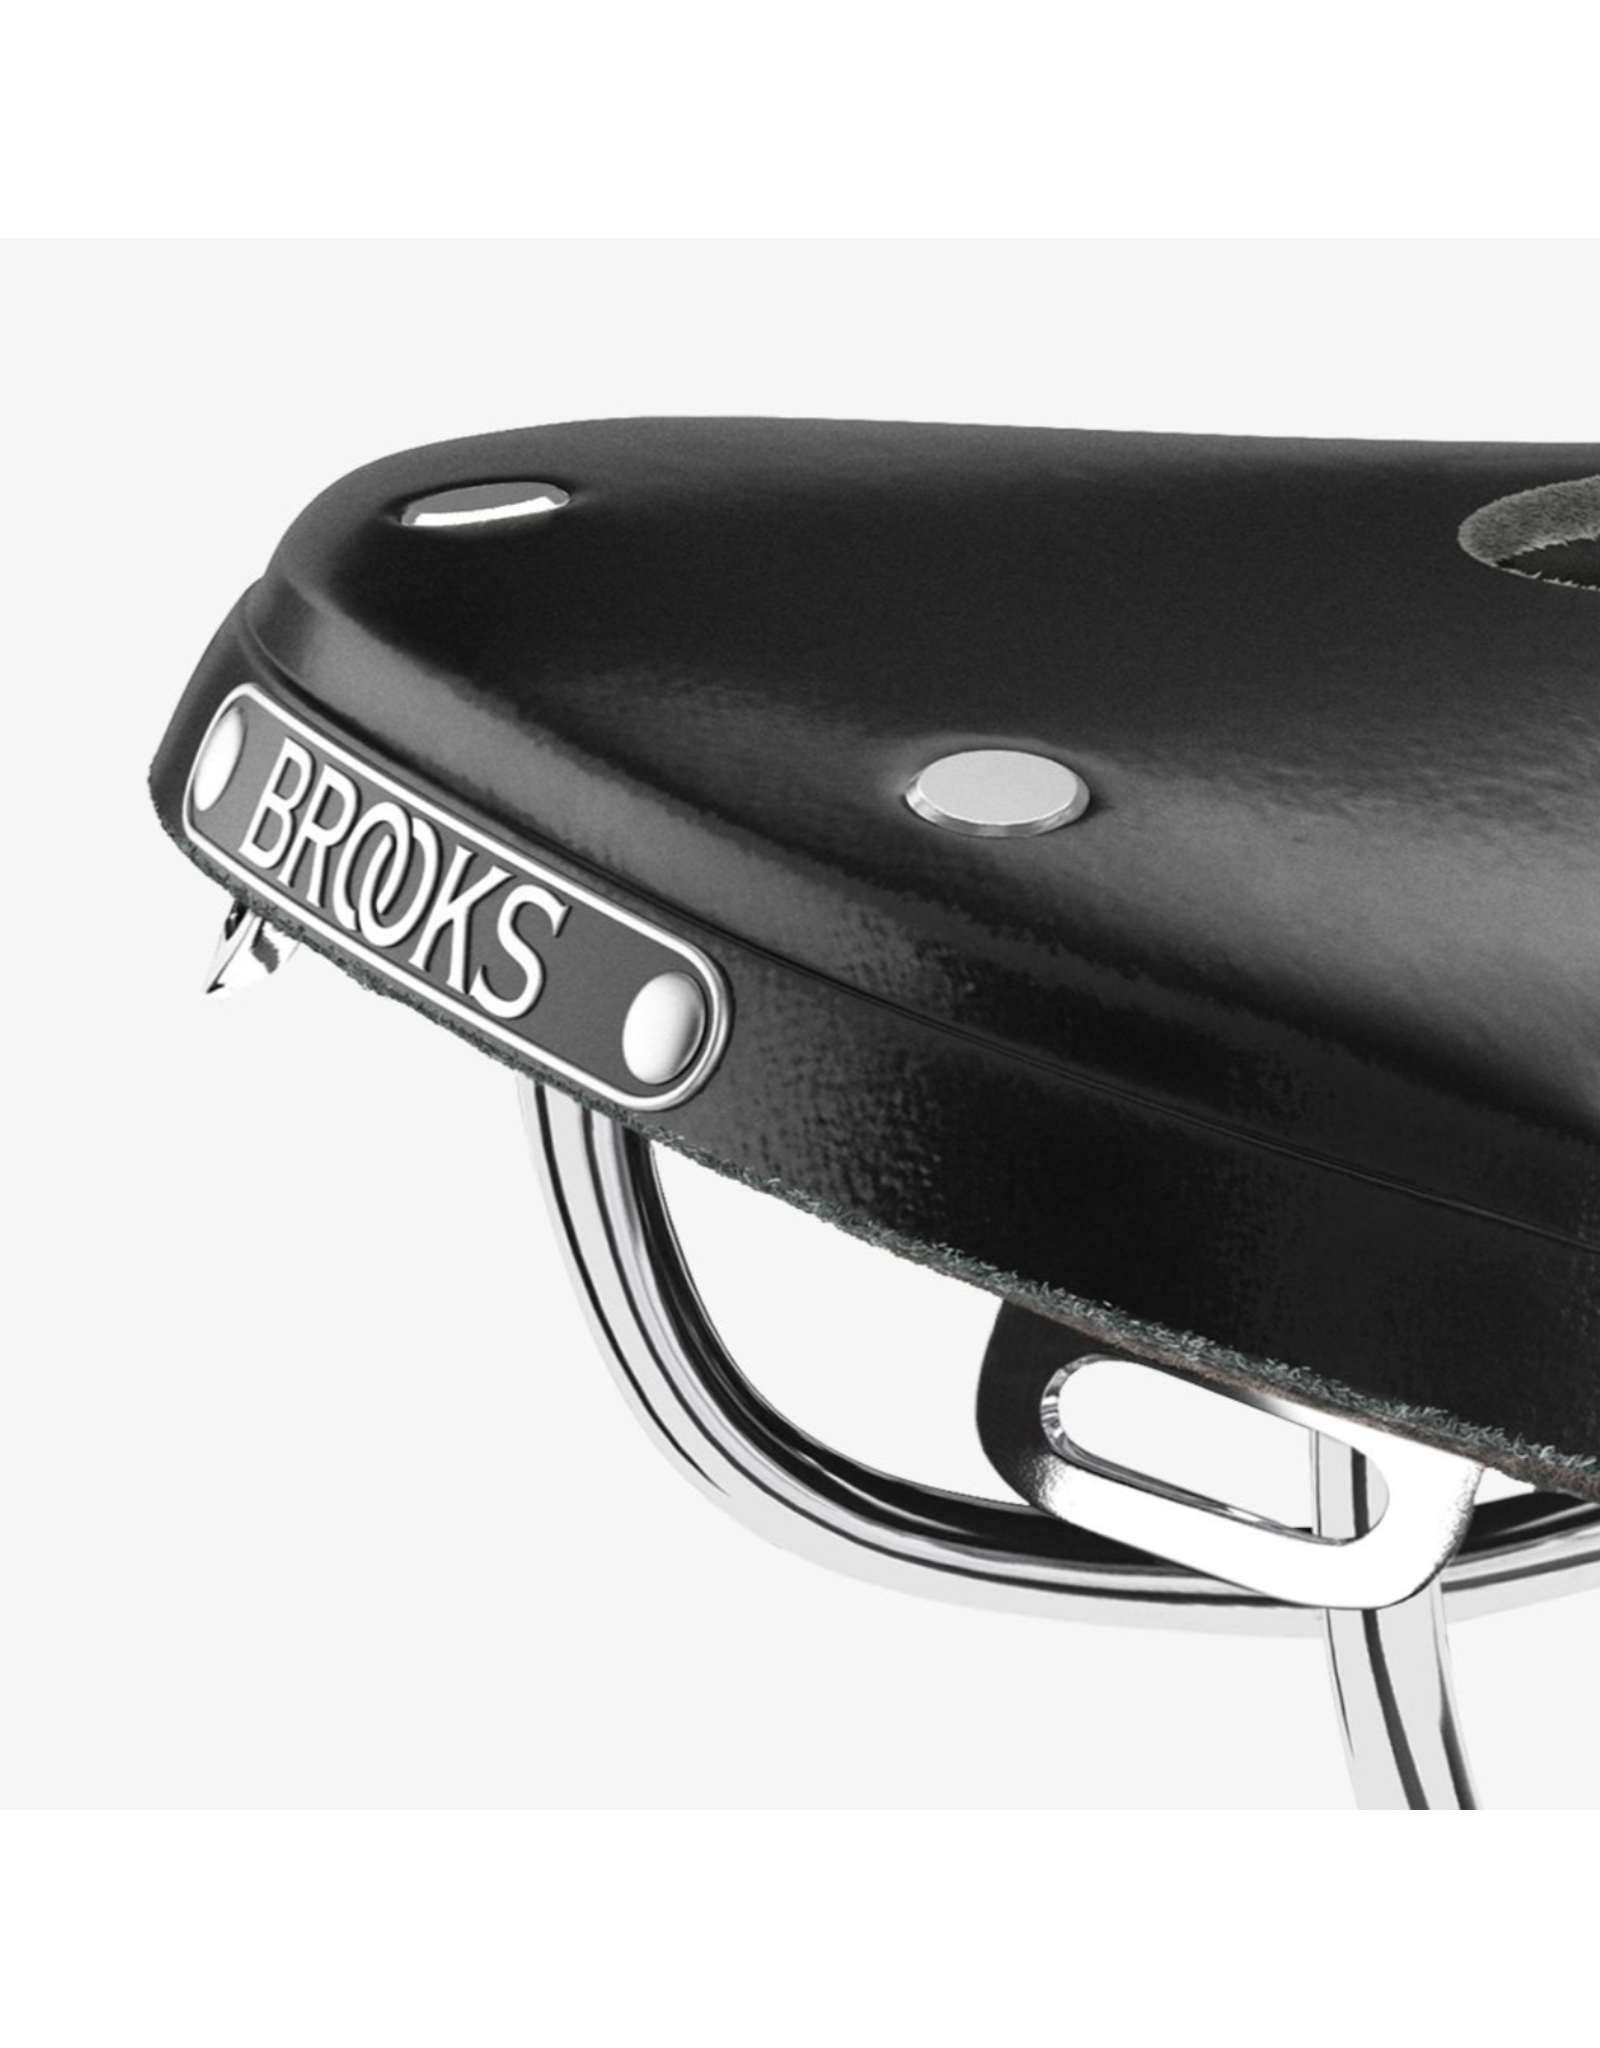 Brook's England BROOKS Classic Leather Saddles B17 Carved Short Black